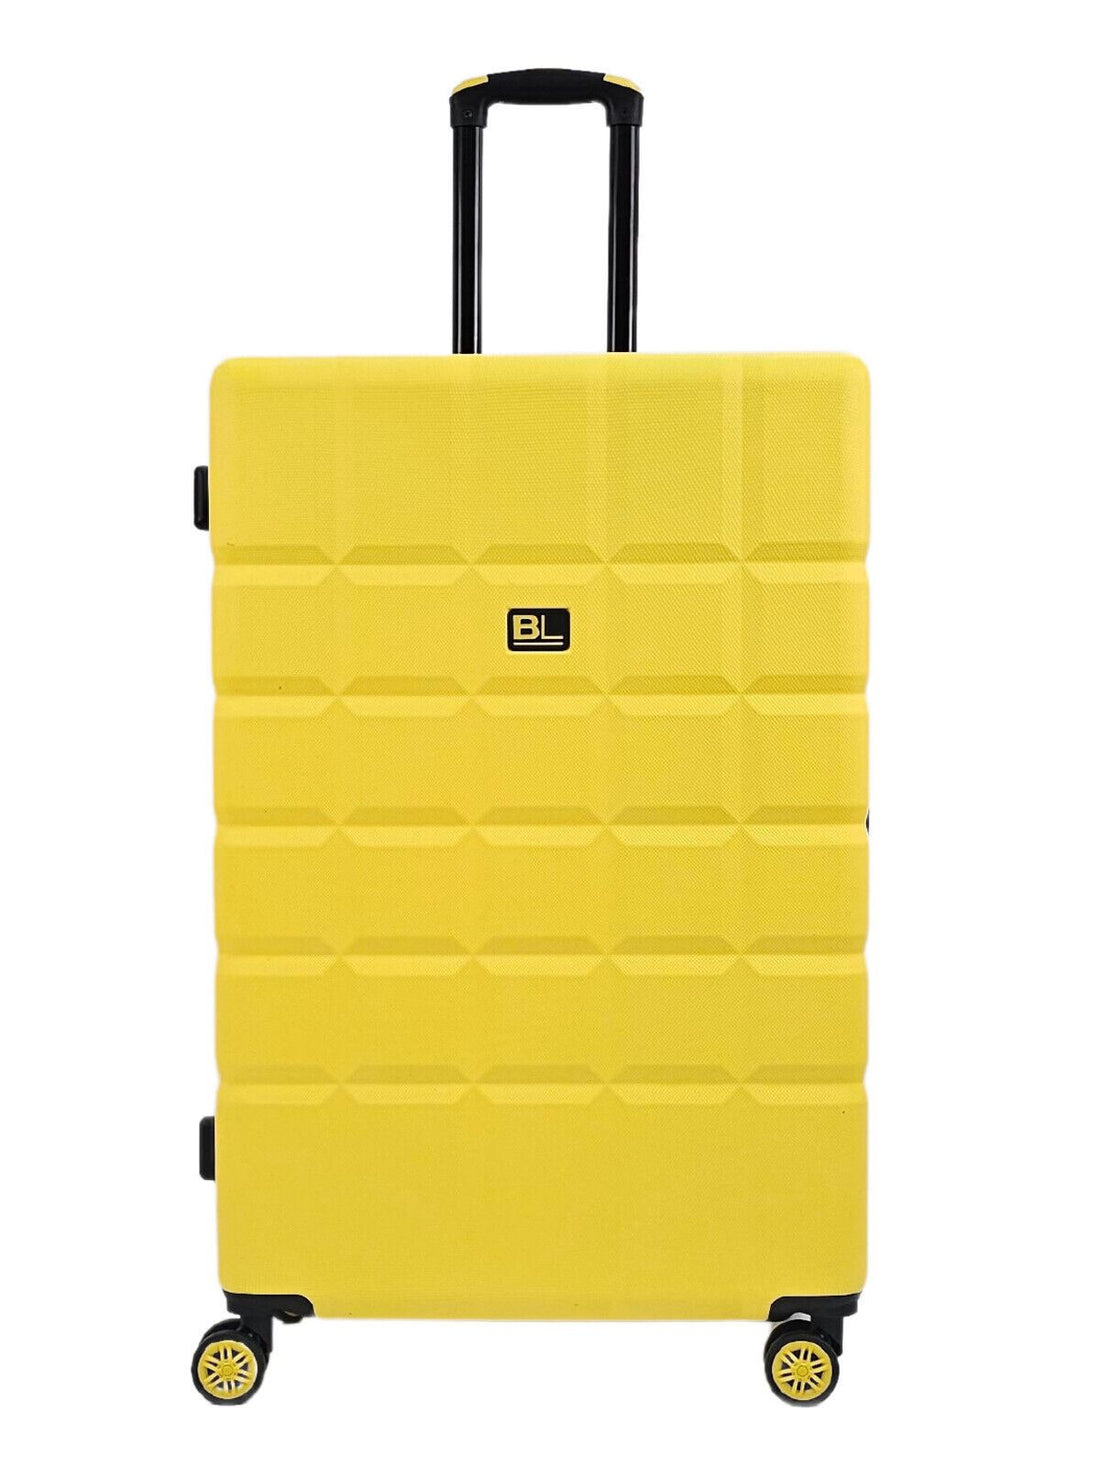 Yellow Hard Shell Classic Suitcase Set 8 Wheel Cabin Luggage Case Travel Bag